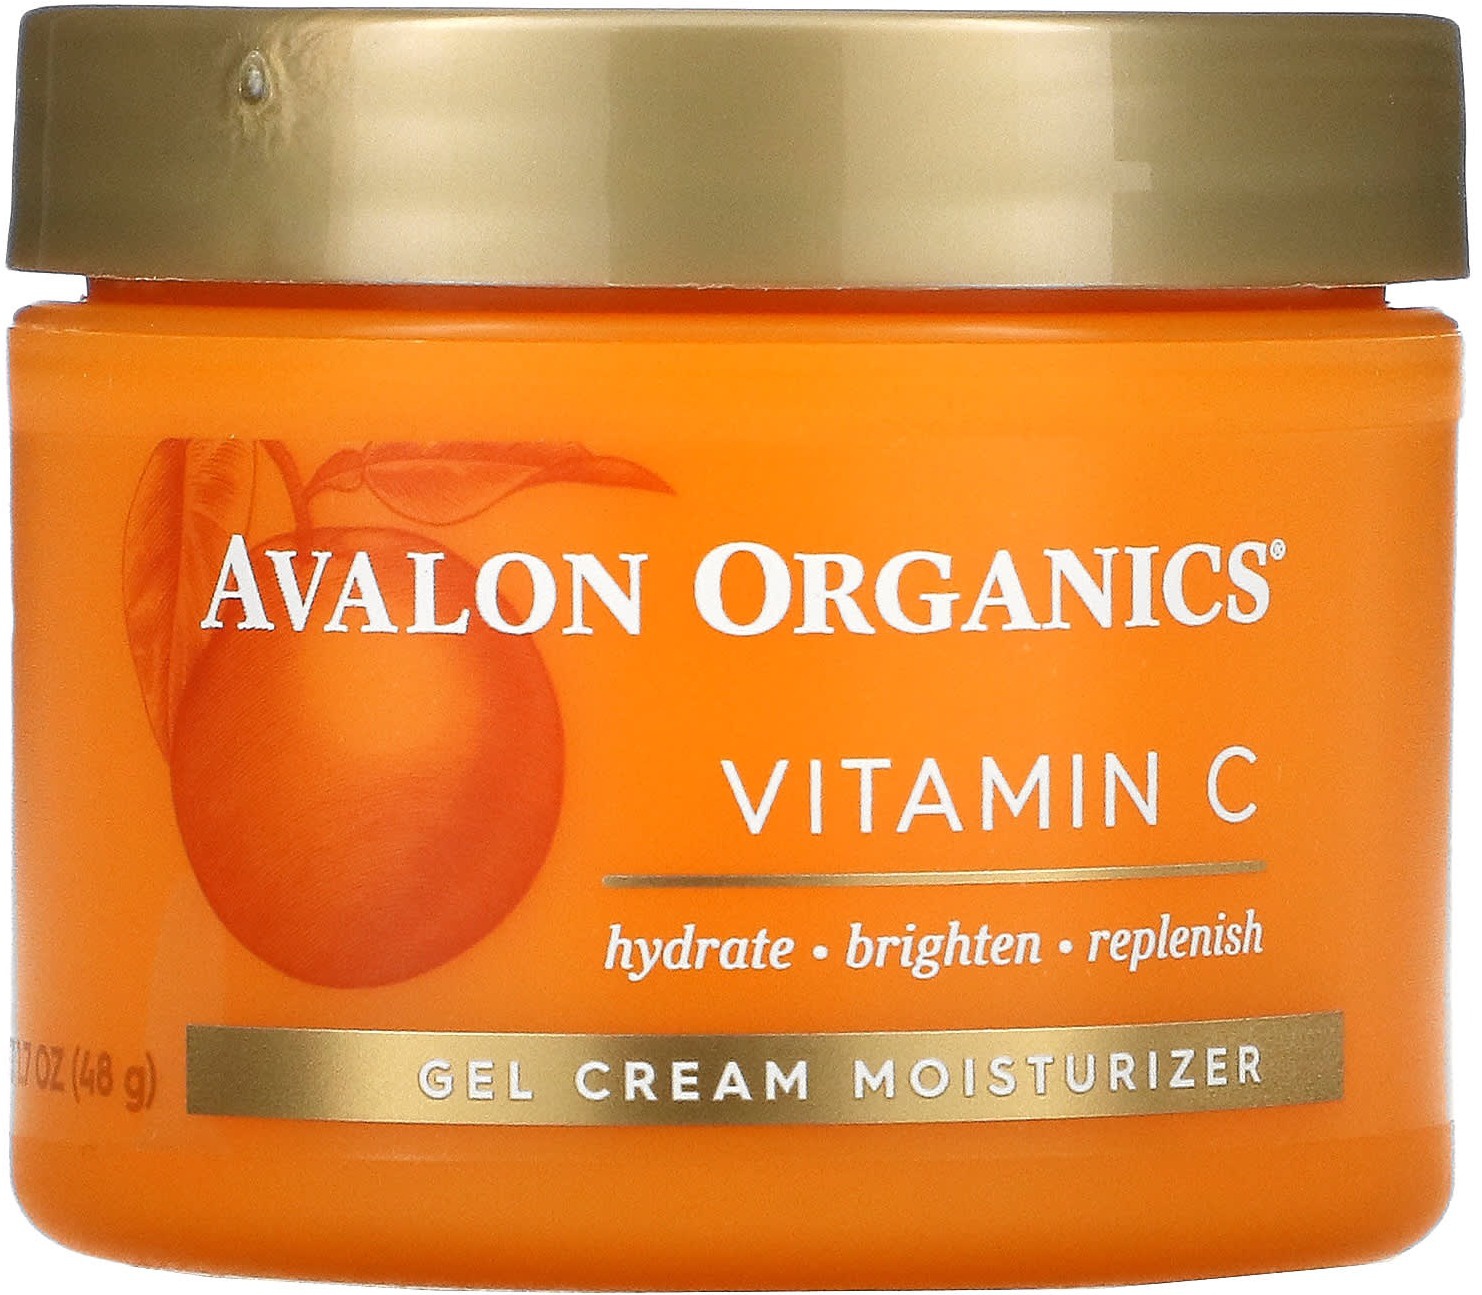 Avalon Organics Vitamin C, Gel Cream Moisturizer